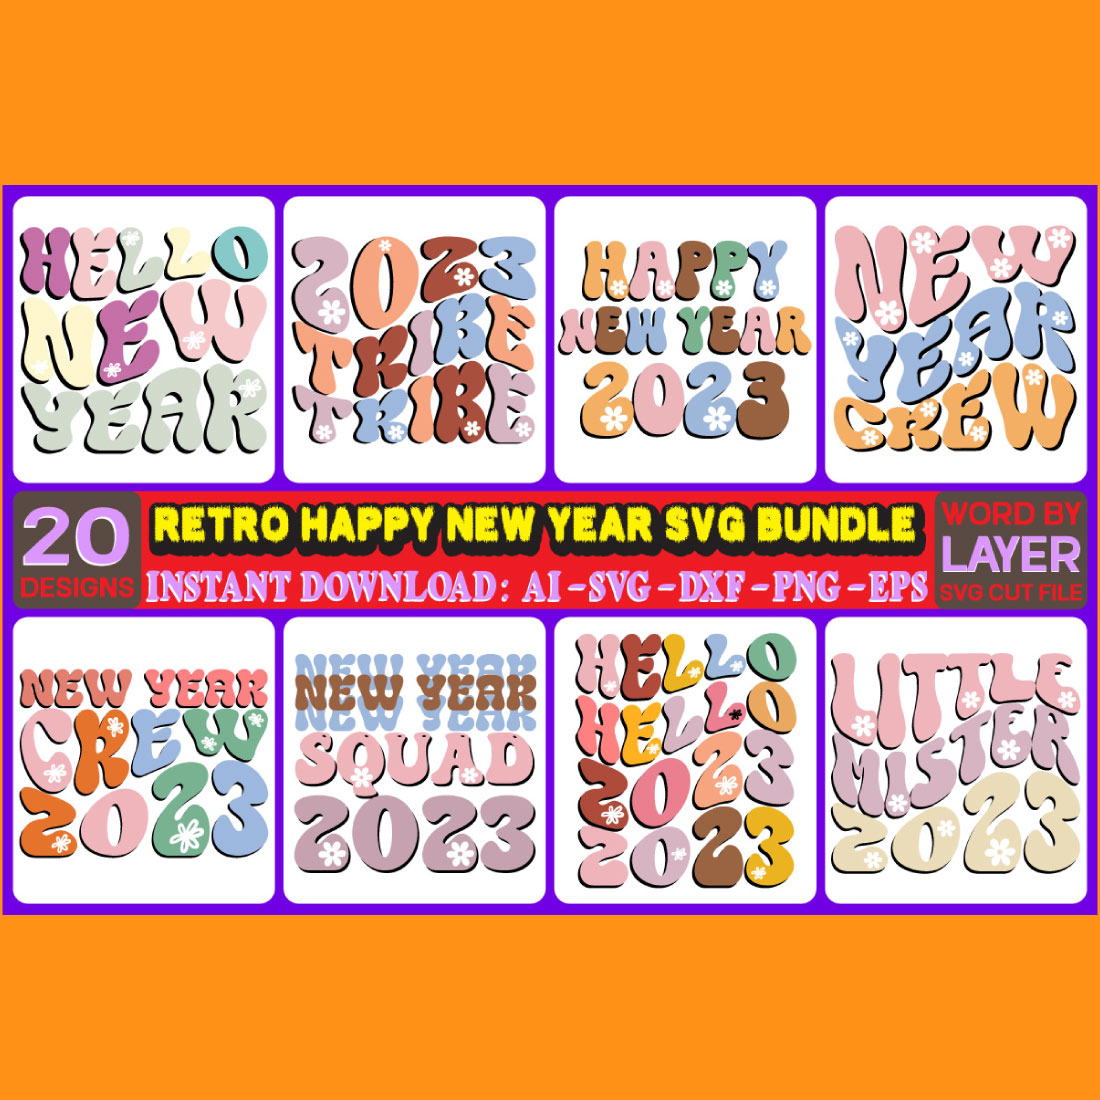 Retro Happy New Year SVG Bundle cover image.